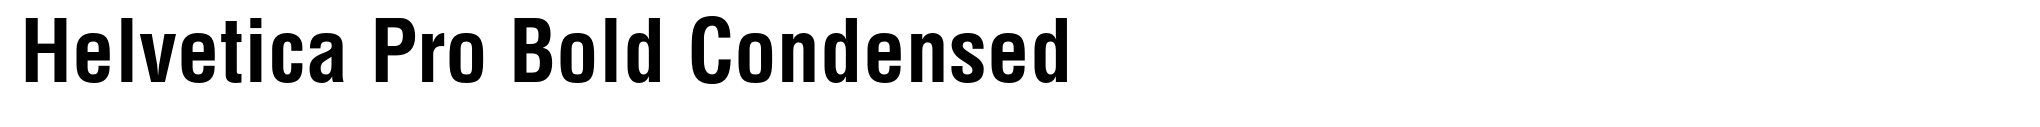 Helvetica Pro Bold Condensed image